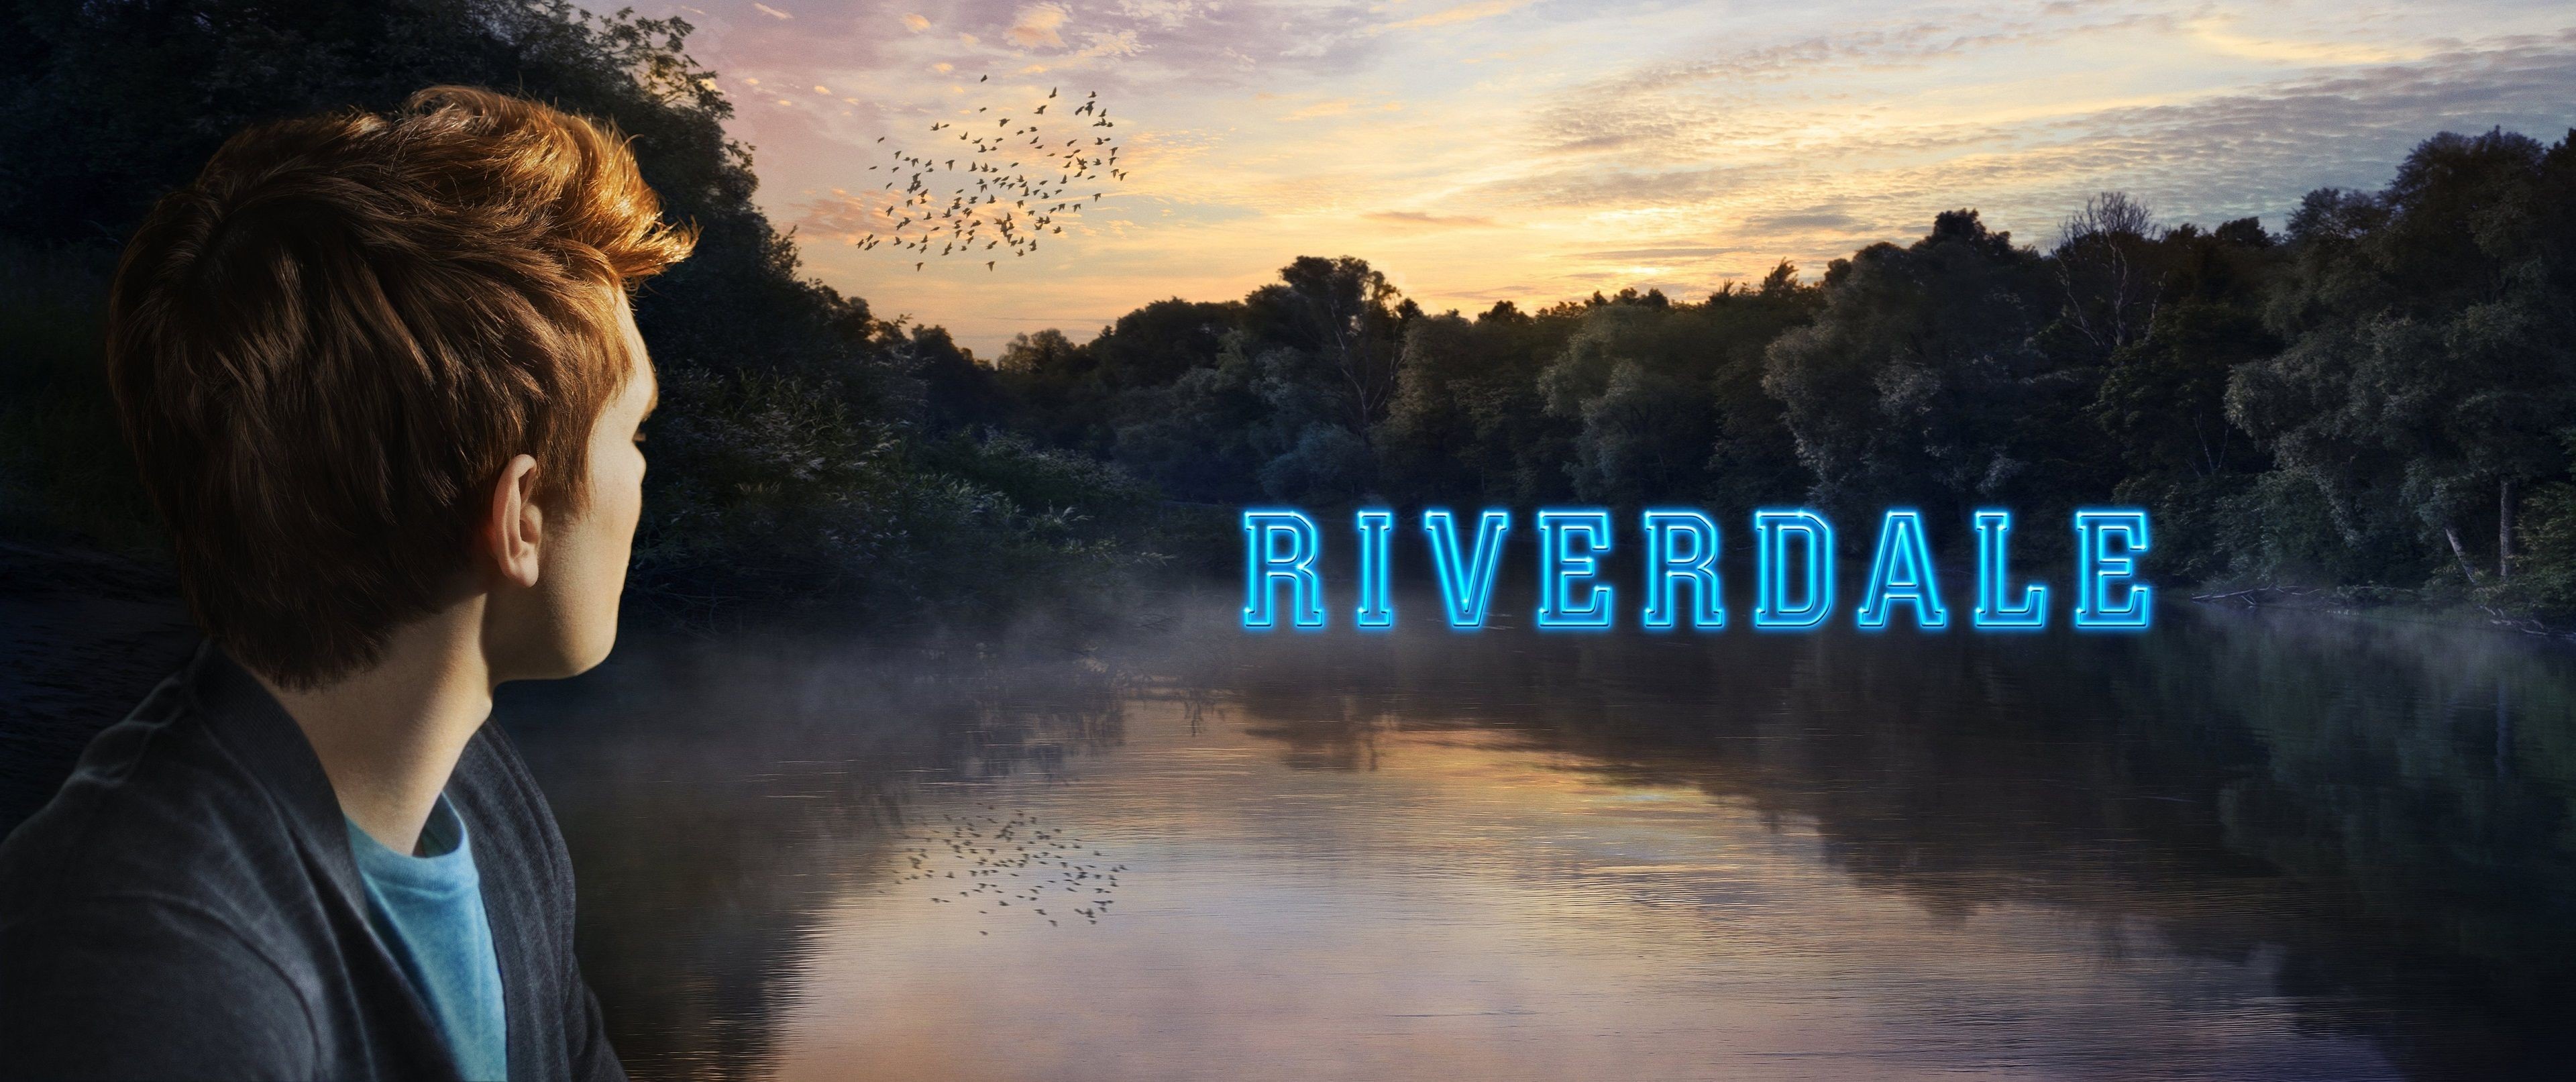 General 3840x1613 riverdale Archie Andrews sunrise TV series ultrawide digital art